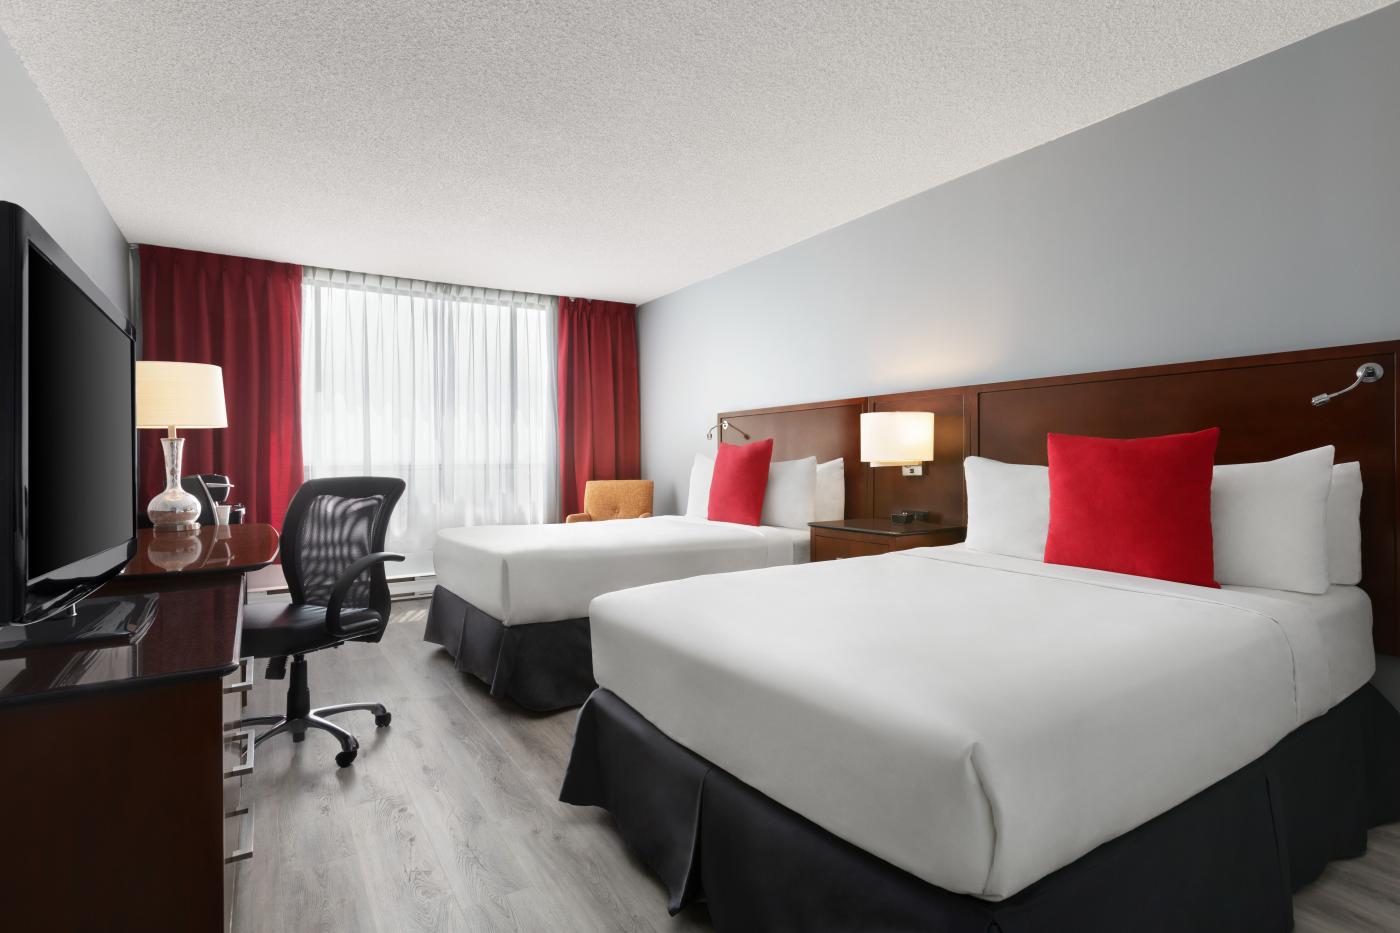 Hôtel & Centre de congrès Travelodge Québec - room with 2 Queen beds